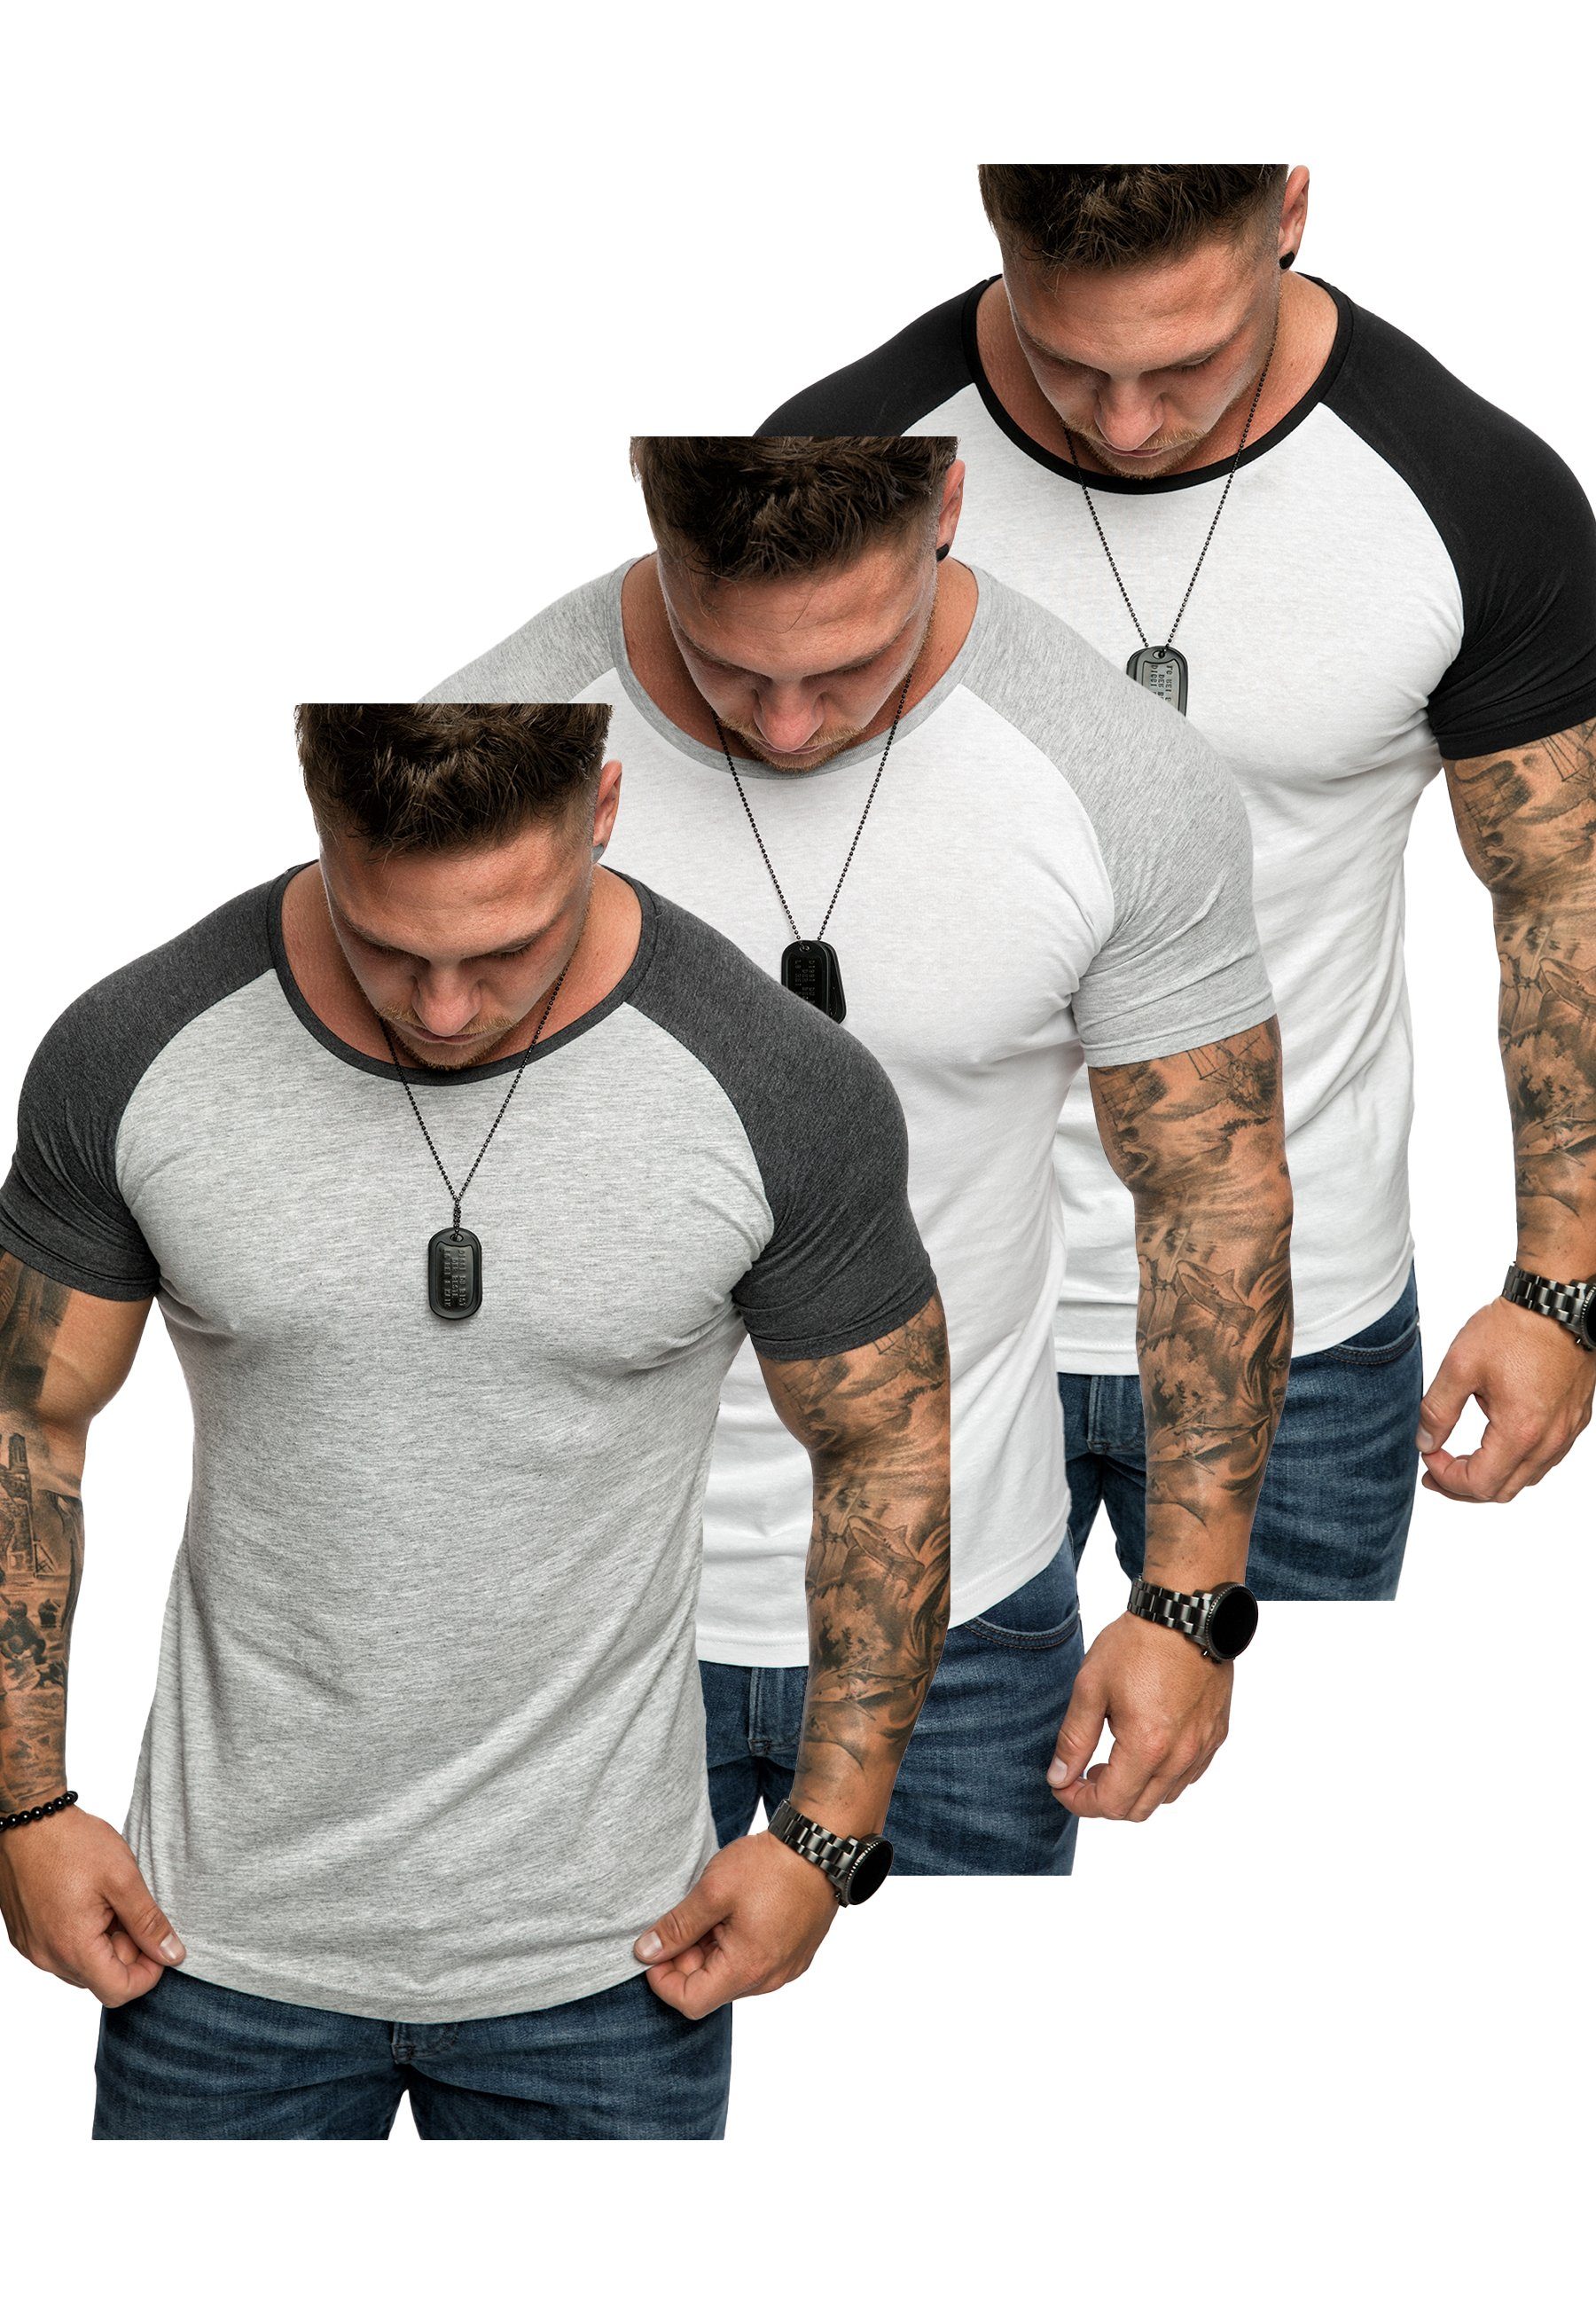 T-Shirt 3. Basic Oversize Kontrast Herren Grau/Anthrazit) 3er-Pack + Weiß/Grau Amaci&Sons OMAHA T-Shirts (Weiß/Schwarz + T-Shirt (3er-Pack) Raglan